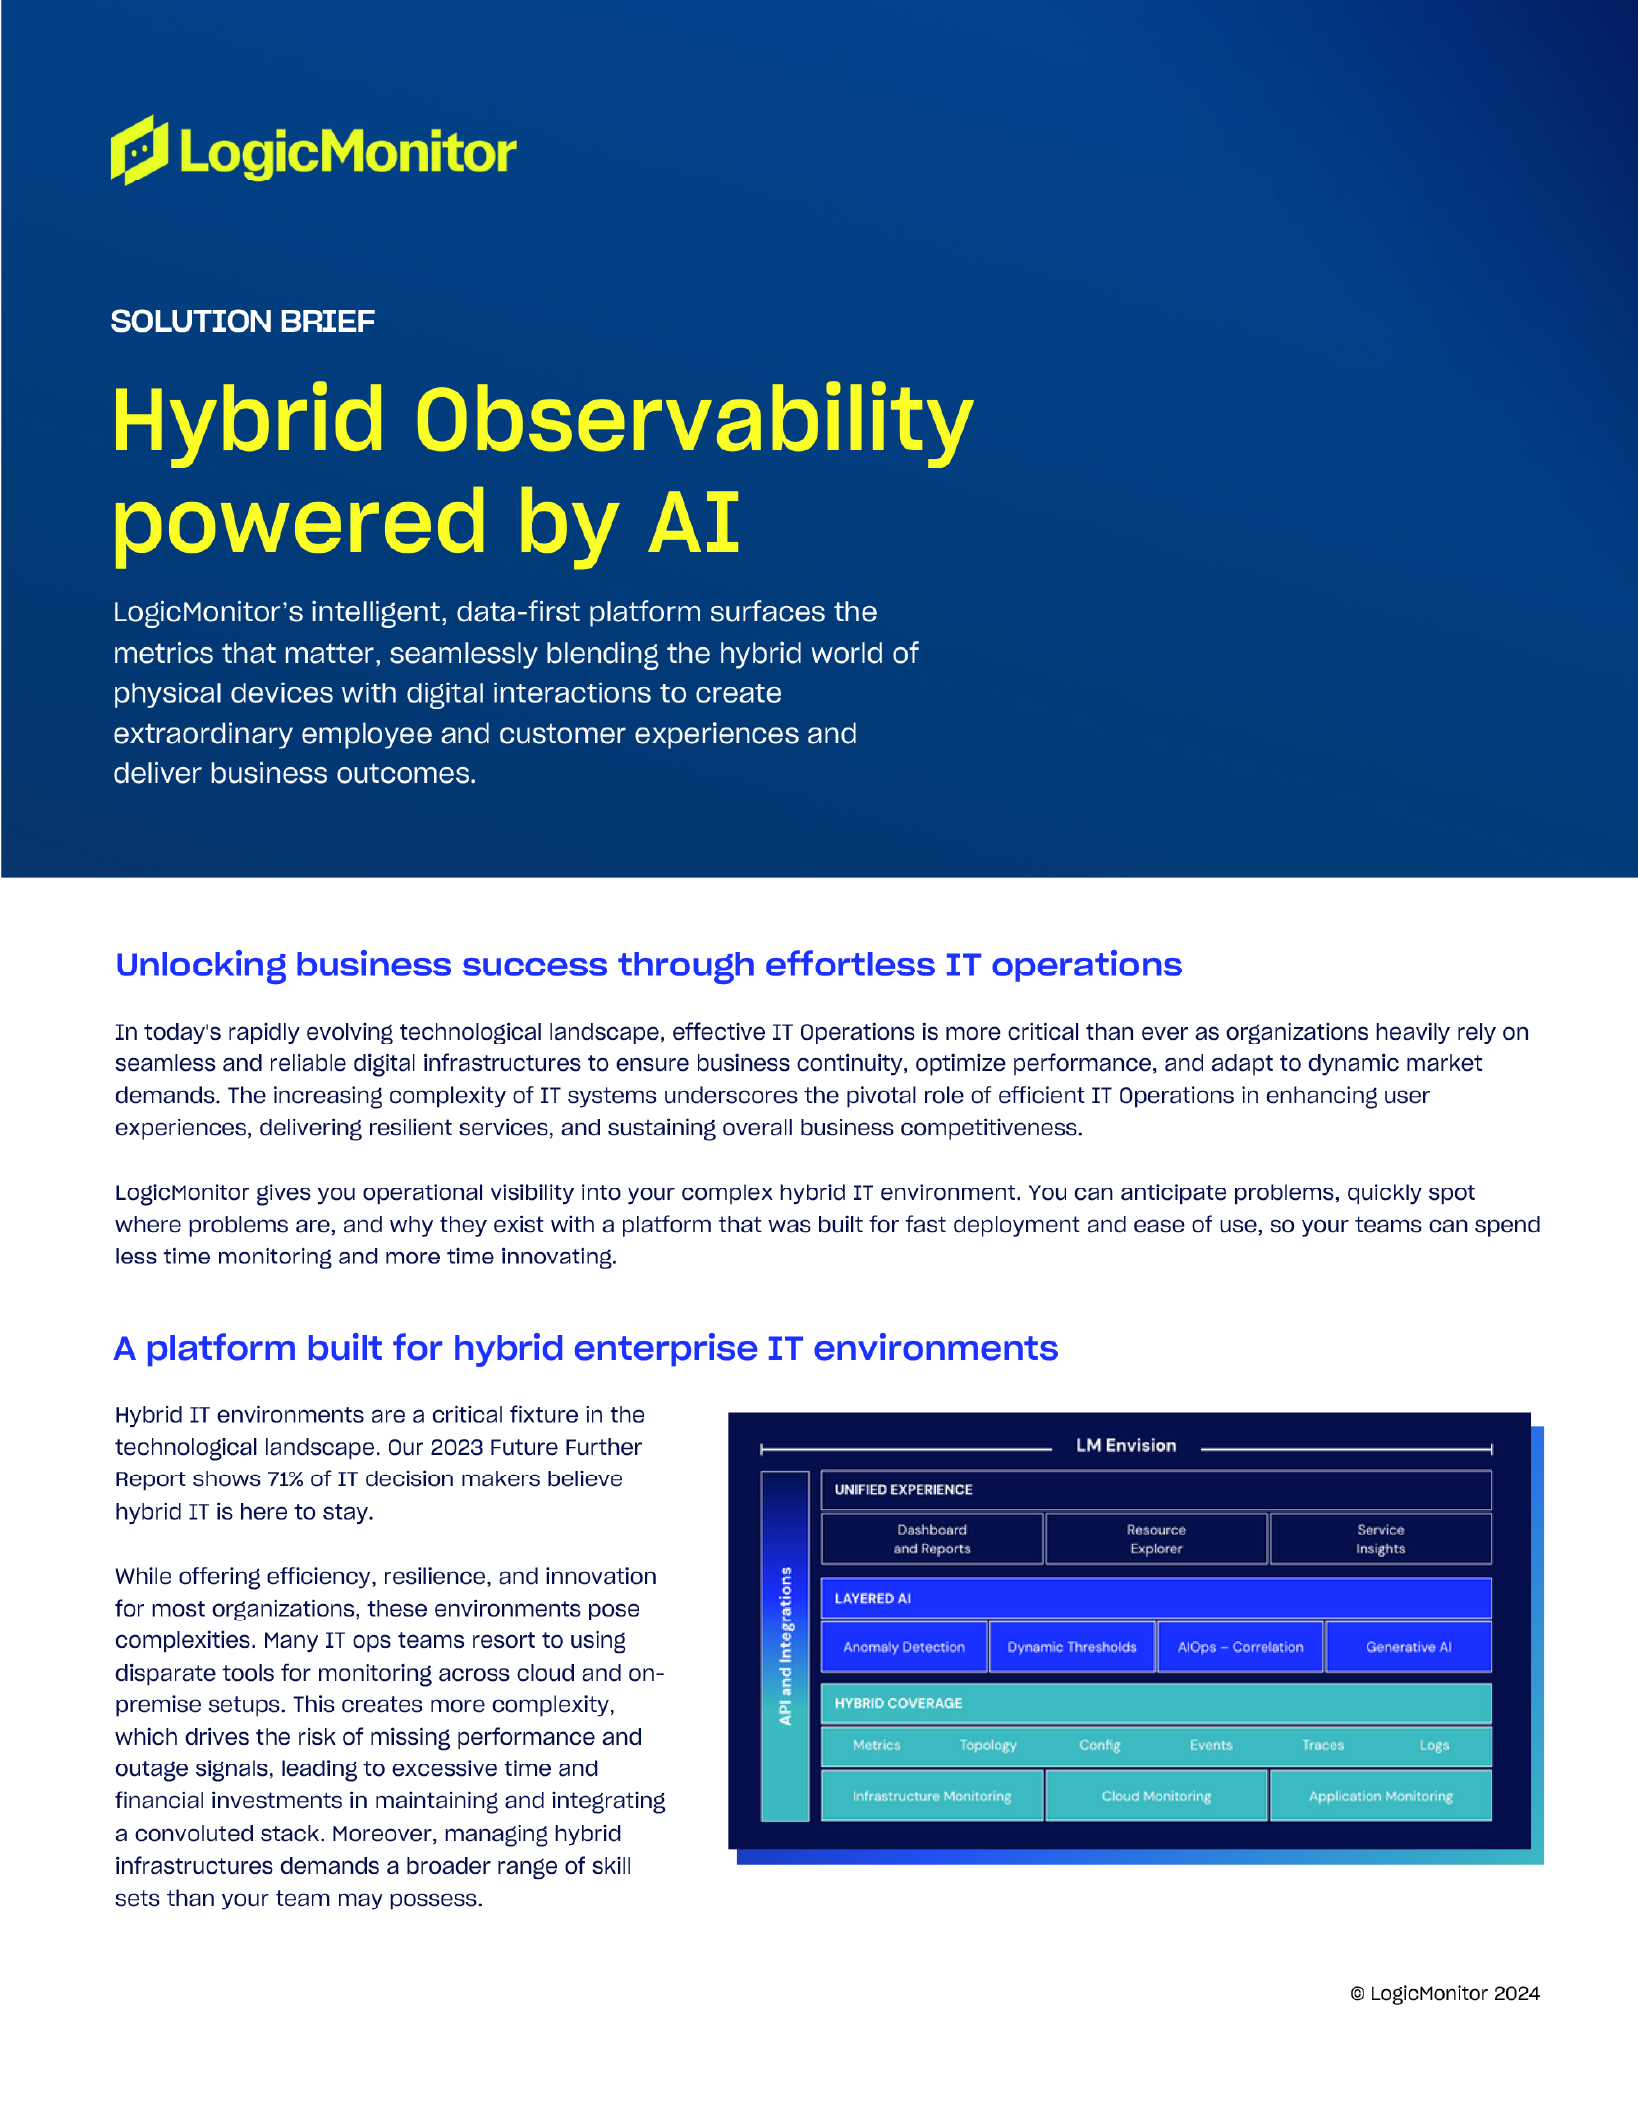 Hybrid Observability Solution Brief